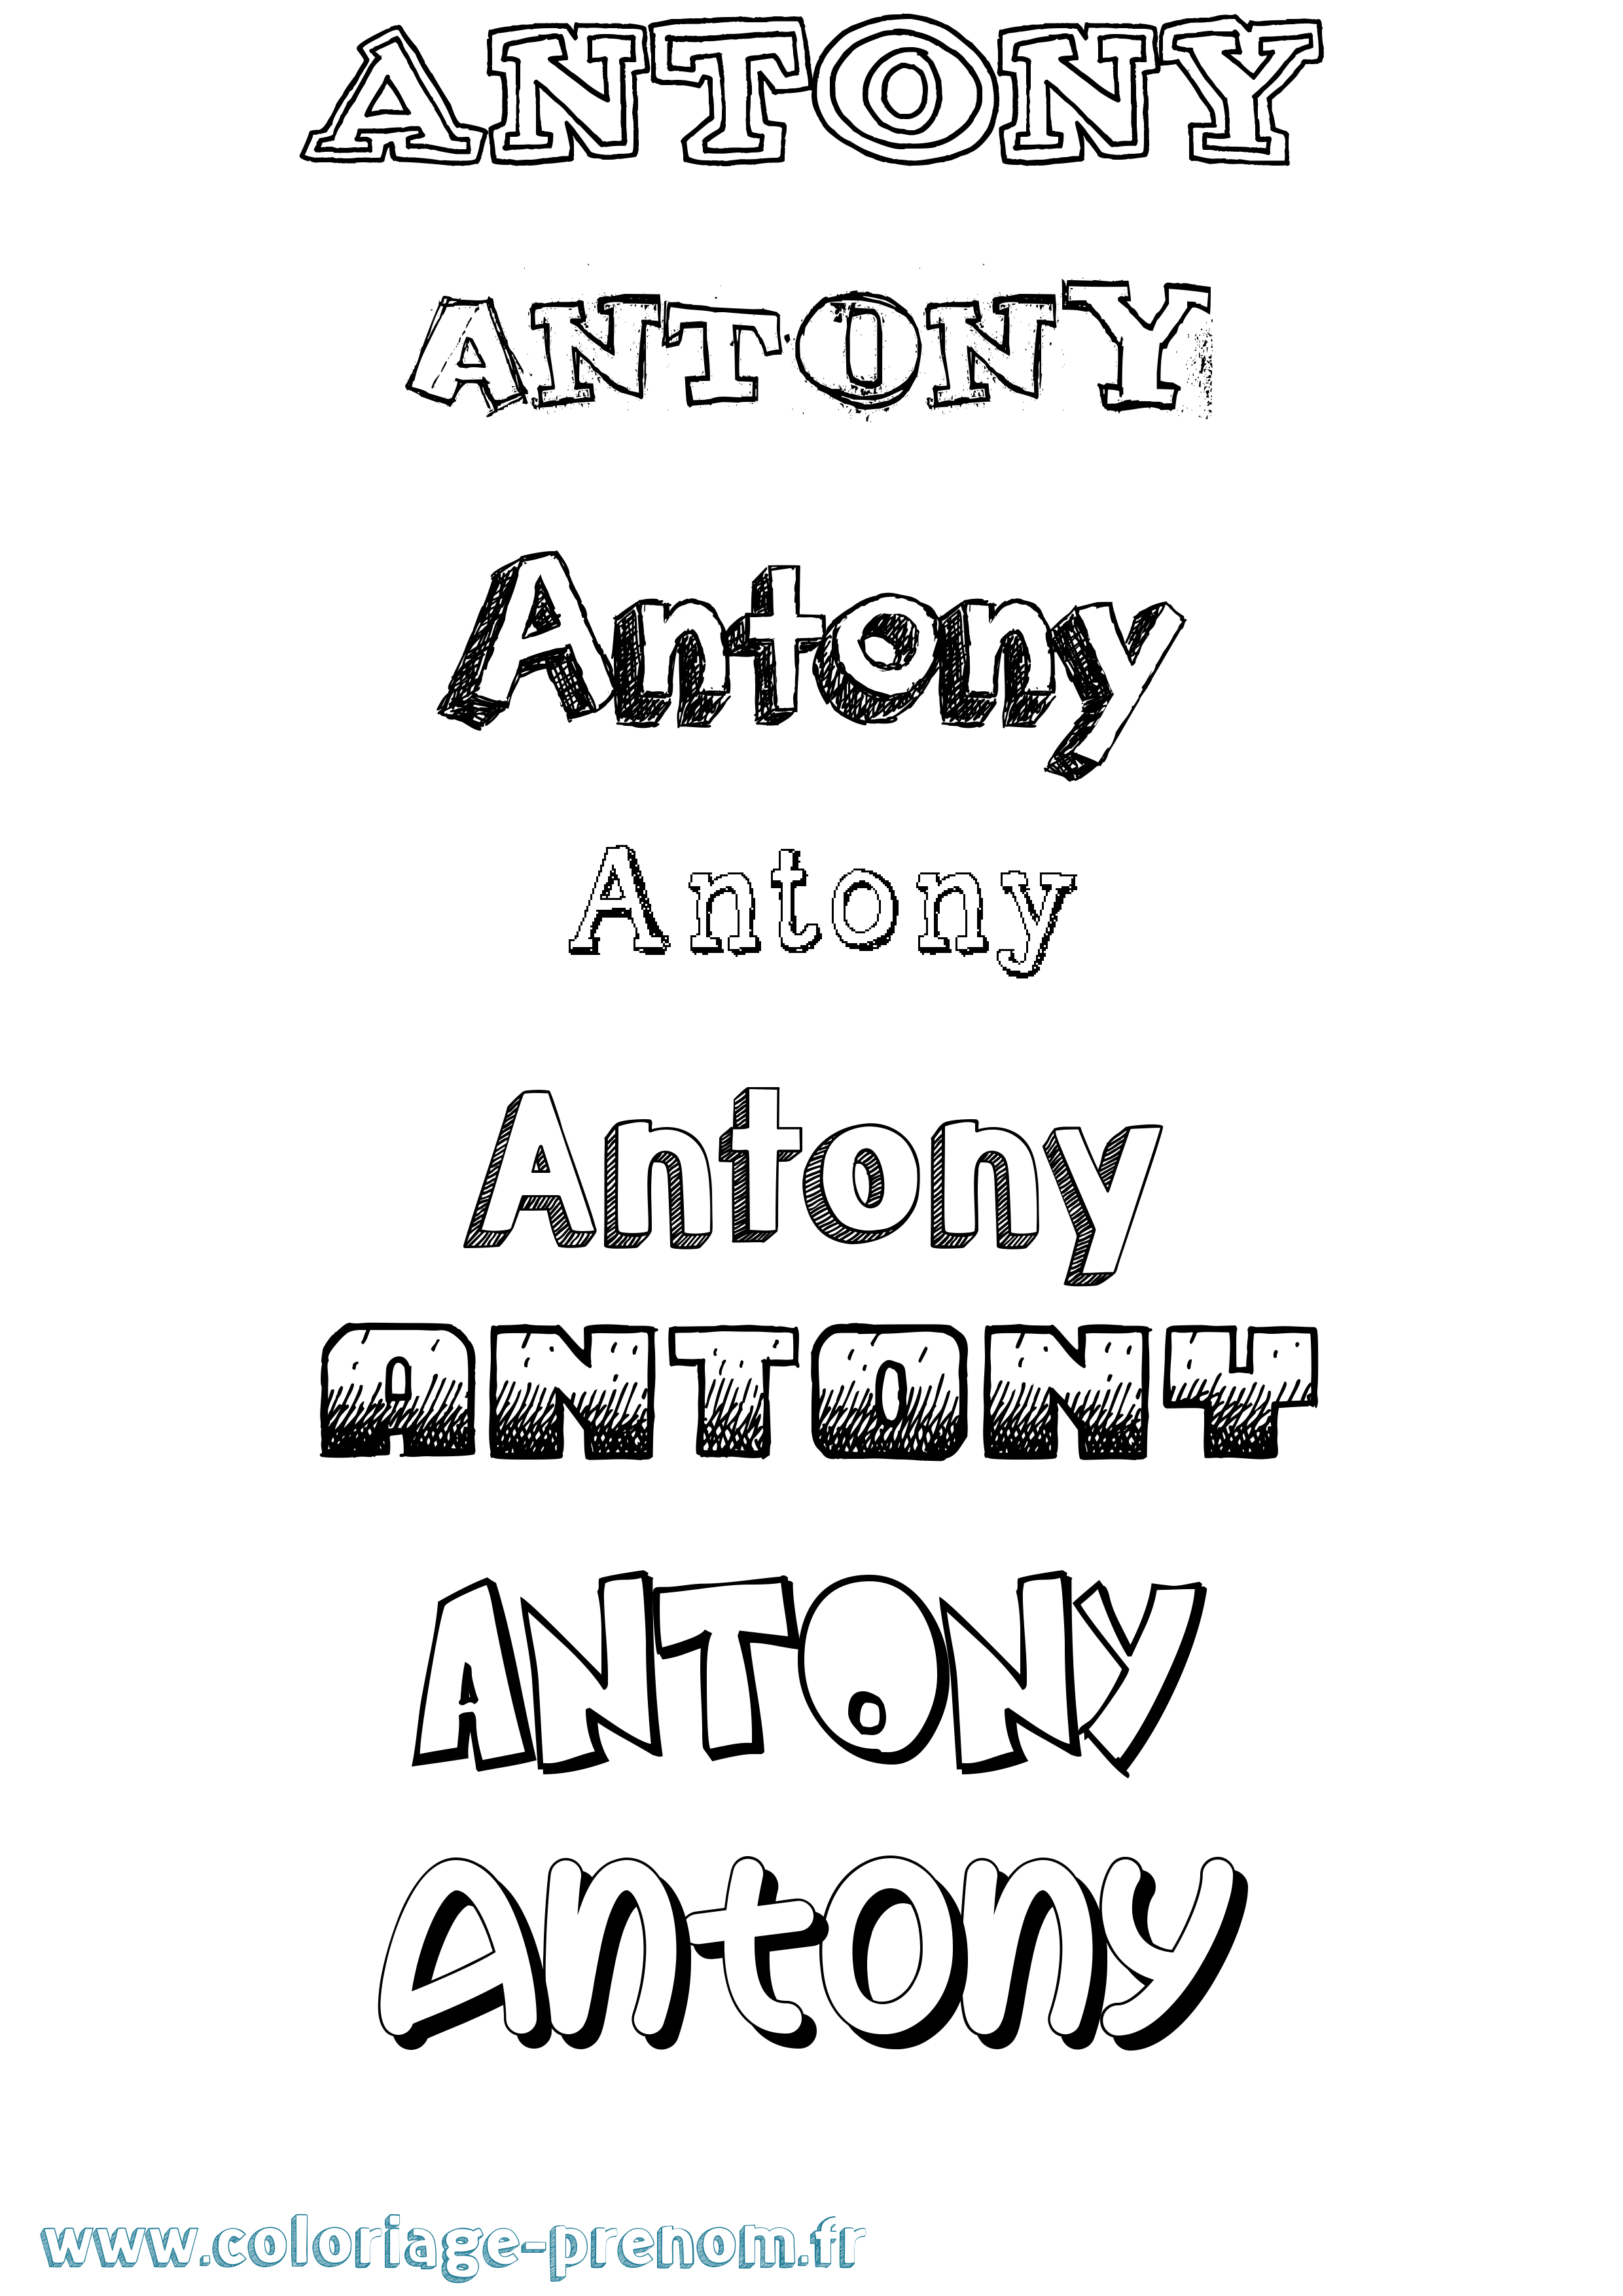 Coloriage prénom Antony